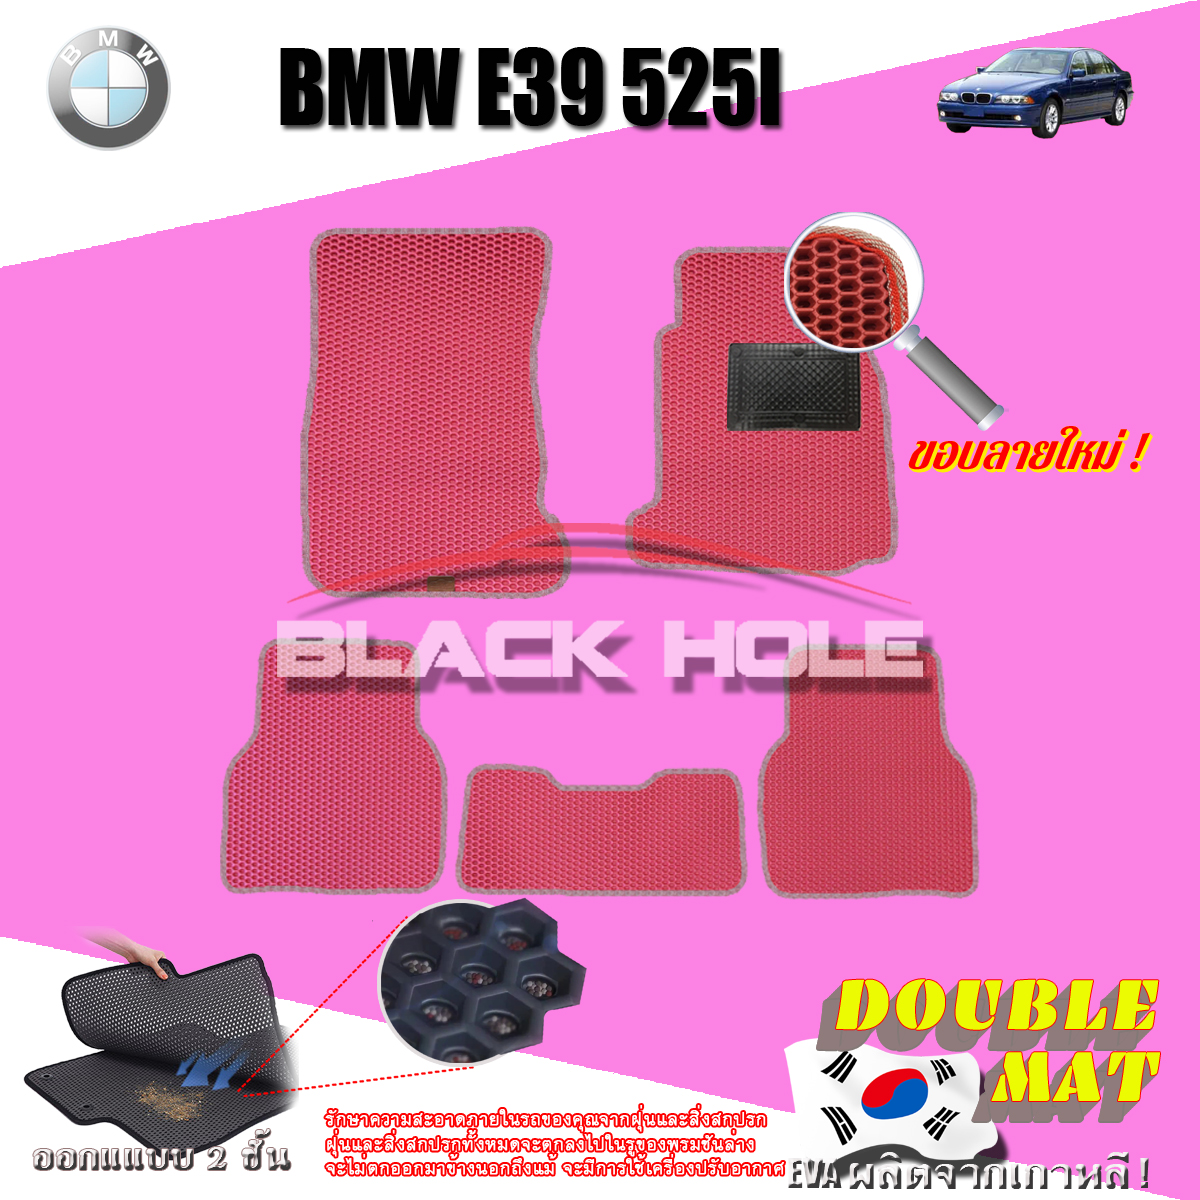 BMW E39 525i ปี 1995 - ปี 2004 พรมรถยนต์E39 พรมเข้ารูปสองชั้นแบบรูรังผึ้ง Blackhole Double Mat (ชุดห้องโดยสาร) สี SET B ( 5 Pcs. ) New Velcro Red - แดงขอบลายใหม่ ( 5 ชิ้น )